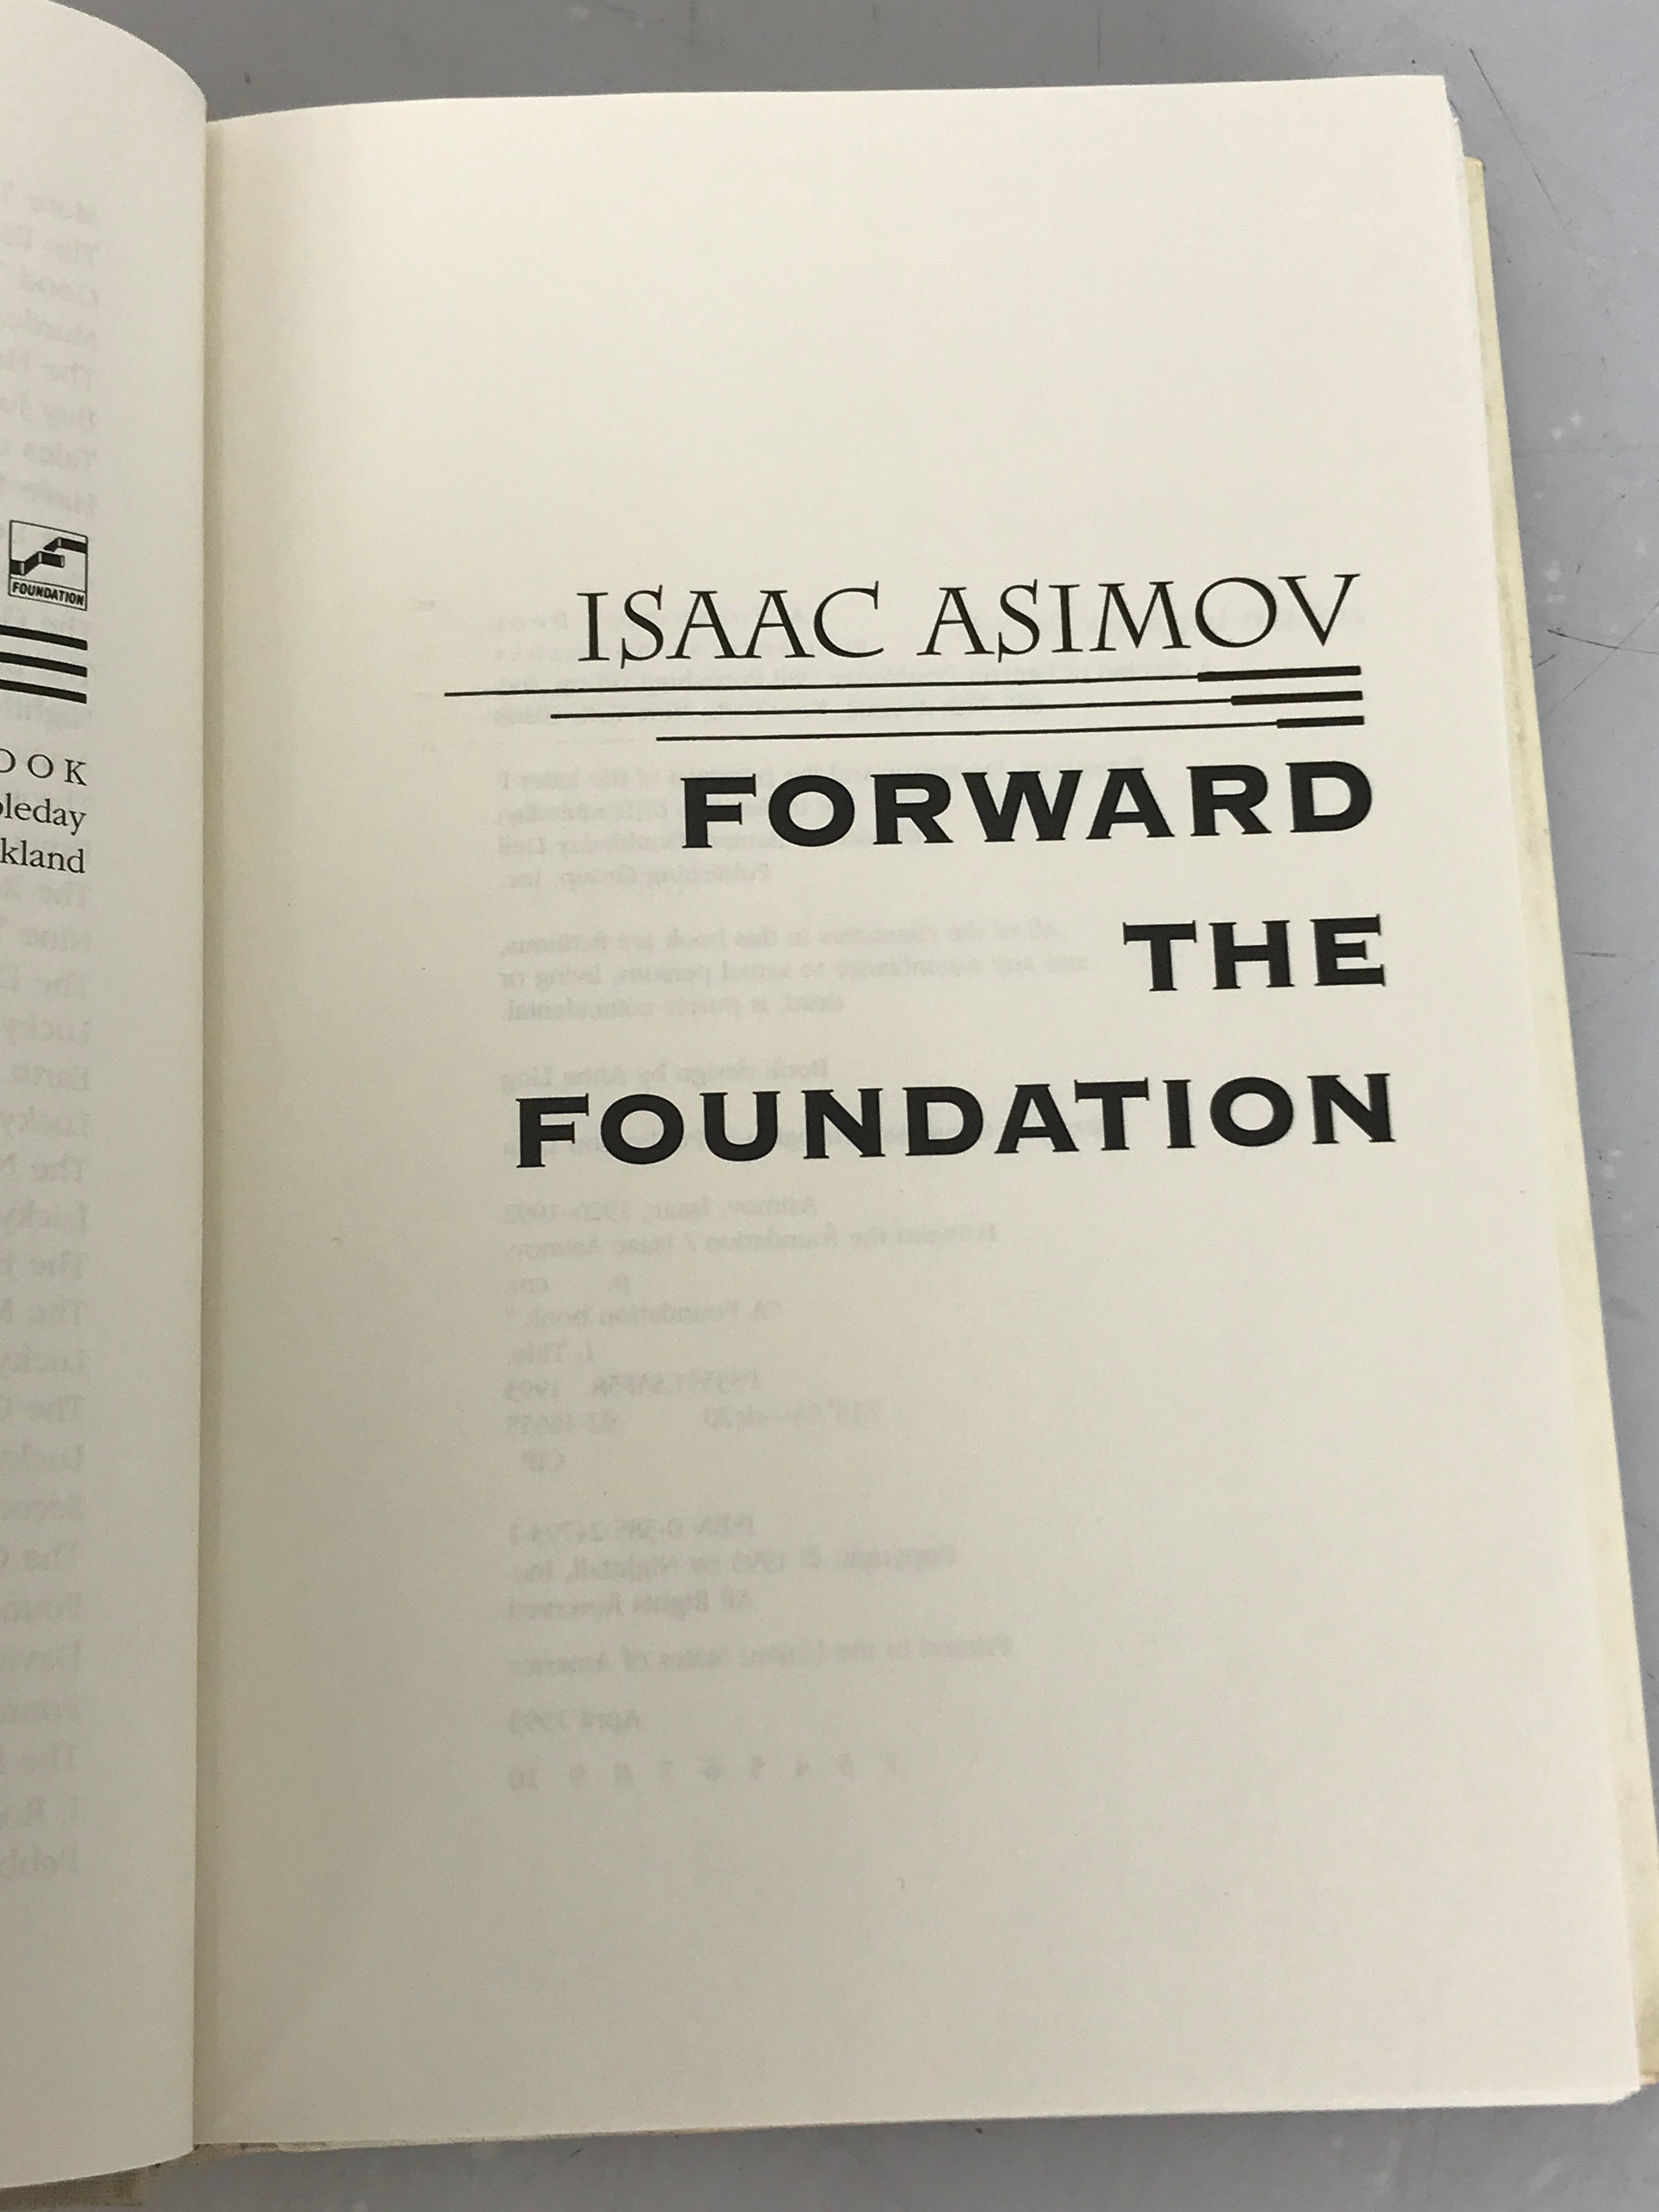 Lot of 2 Isaac Asimov: Foundation and Earth / Forward the Foundation HC DJ